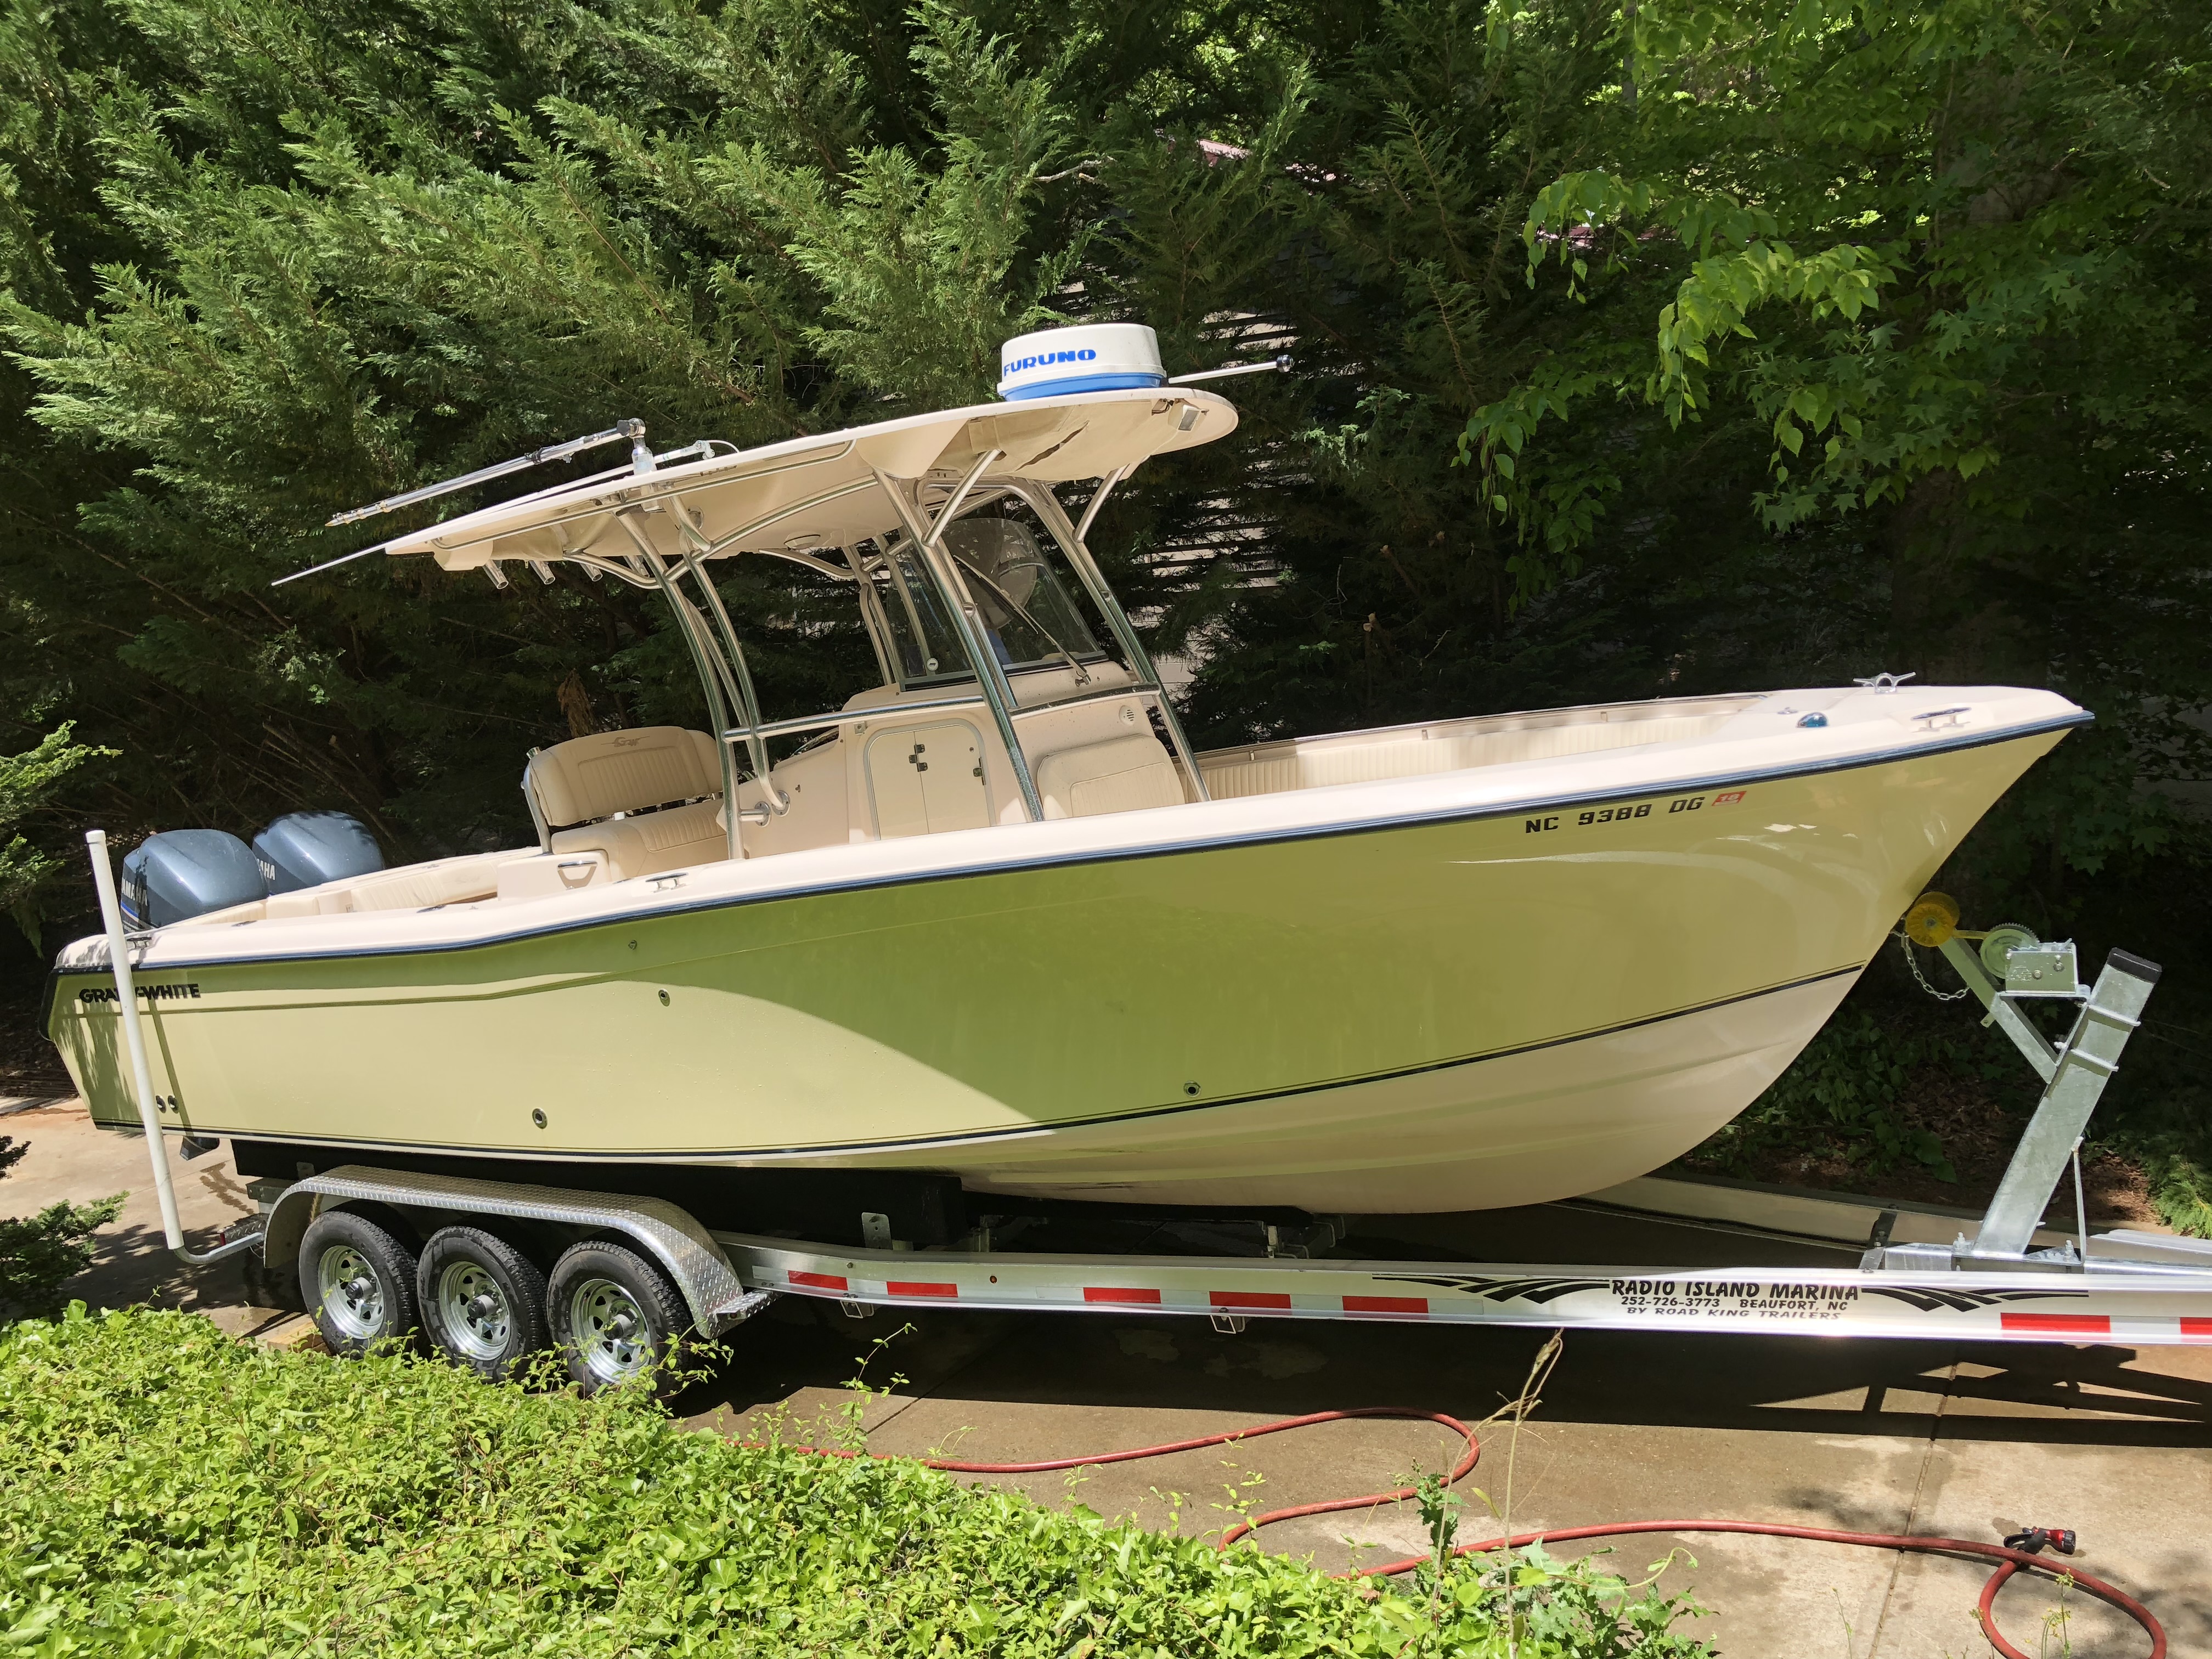 2007 Grady-White 283 Release Power boat for sale in Gainesville, GA - image 18 